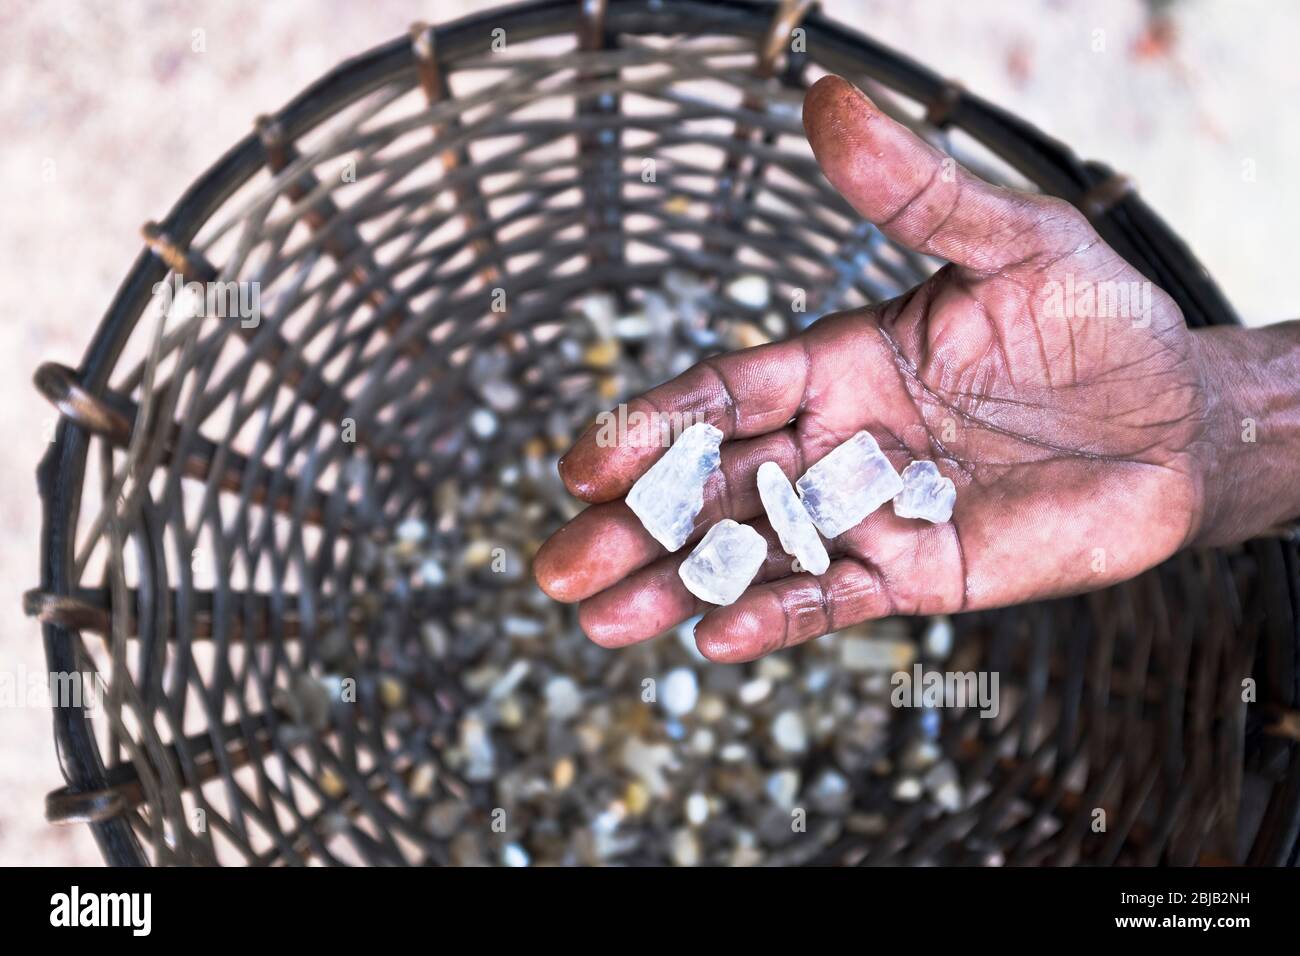 dh Sri Lankan Moonstone Mines AMBALANGODA SRI LANKA Hand with uncut raw moonstones from mining pan gemstone gem gemstones Stock Photo